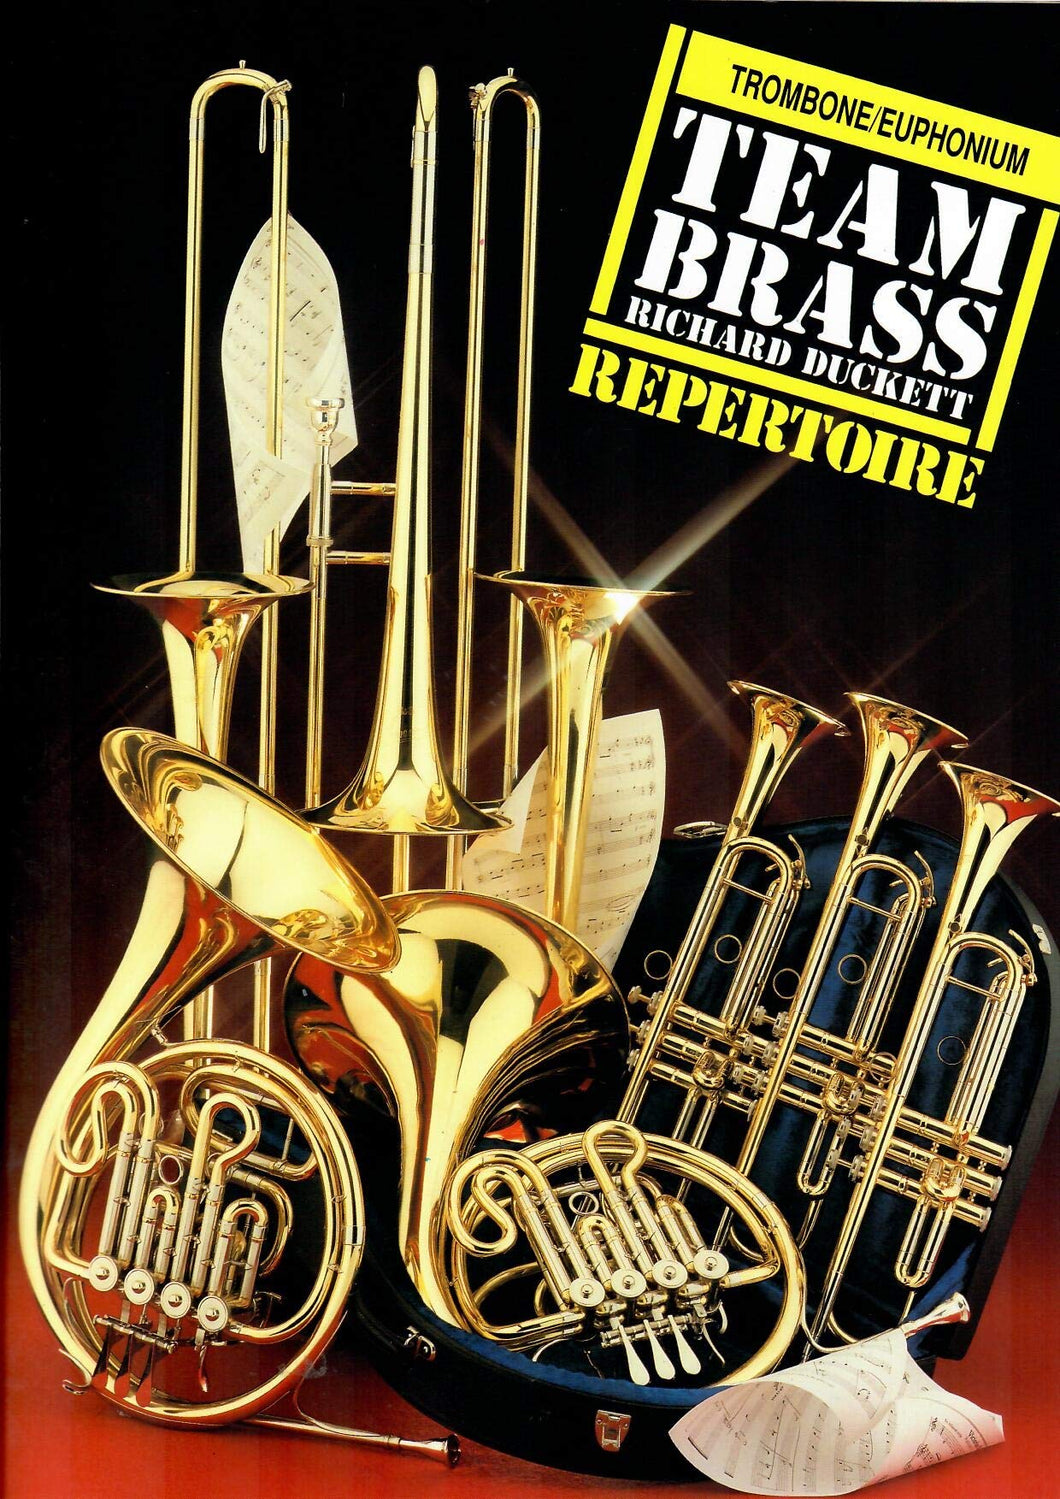 Team Brass. Band Instruments Repertoire (Trombone Band)